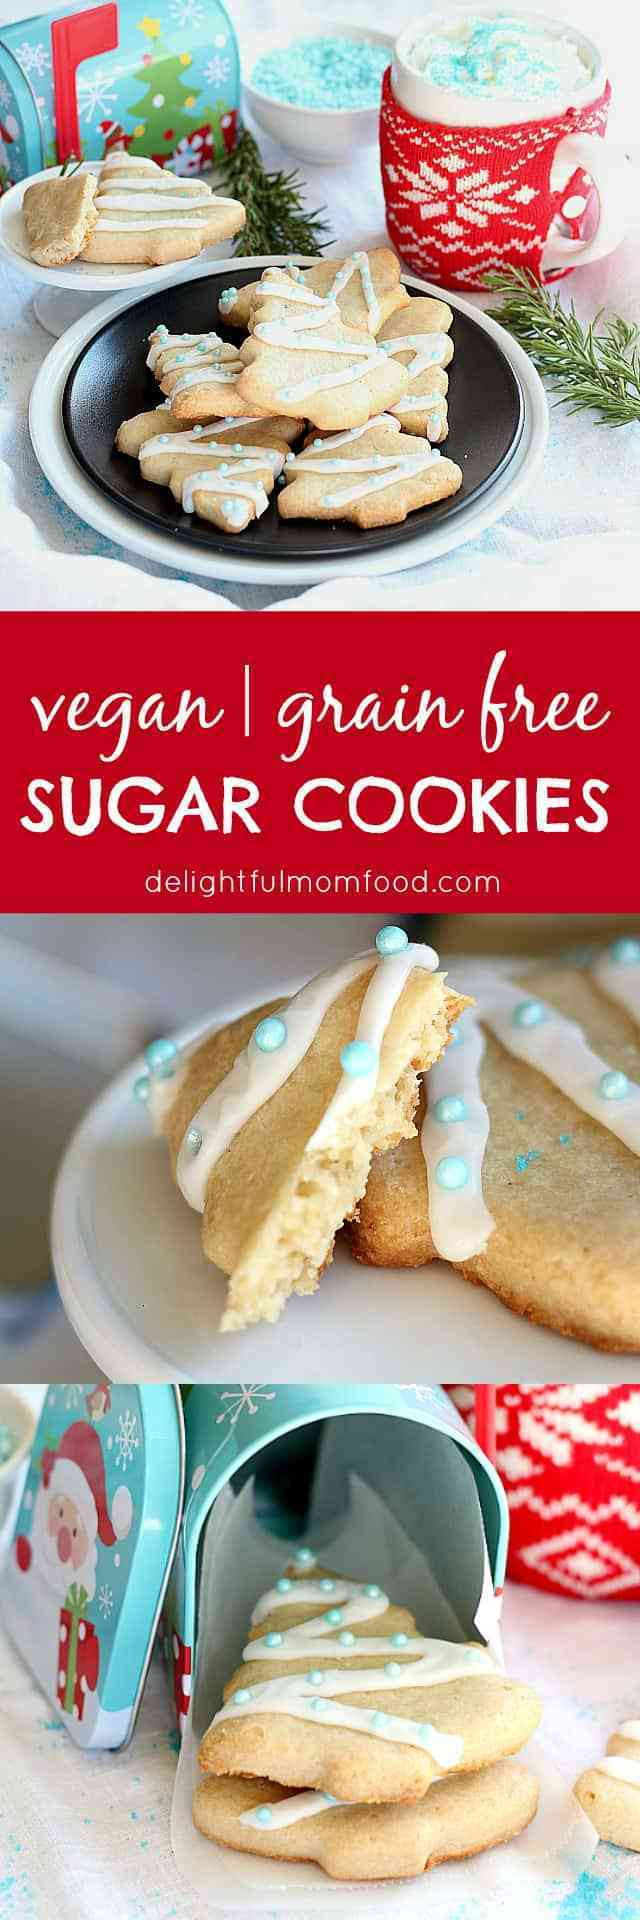 Vegan Christmas Sugar Cookies
 Vegan Sugar Cookies Grain Free Gluten Free